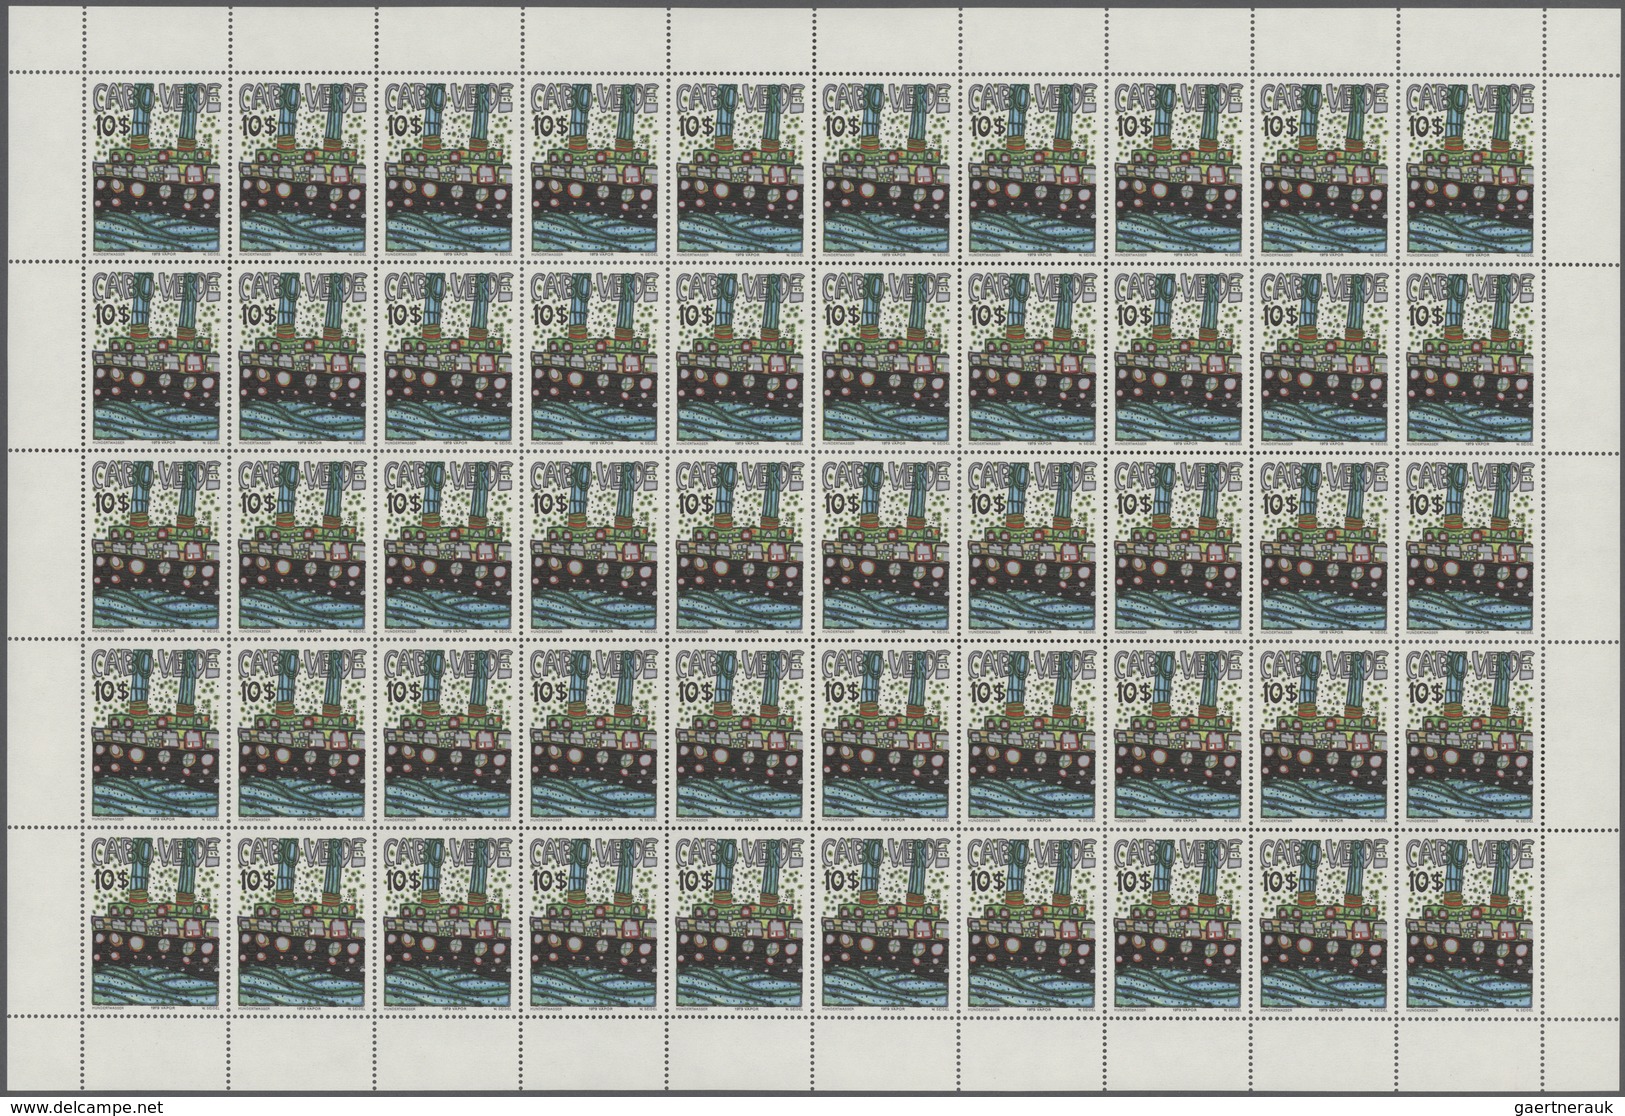 Kap Verde: 1982, Hundertwasser, Not Issued $10, Complete (unfolded) Sheet Of 50 Stamps, Mint Never H - Kap Verde